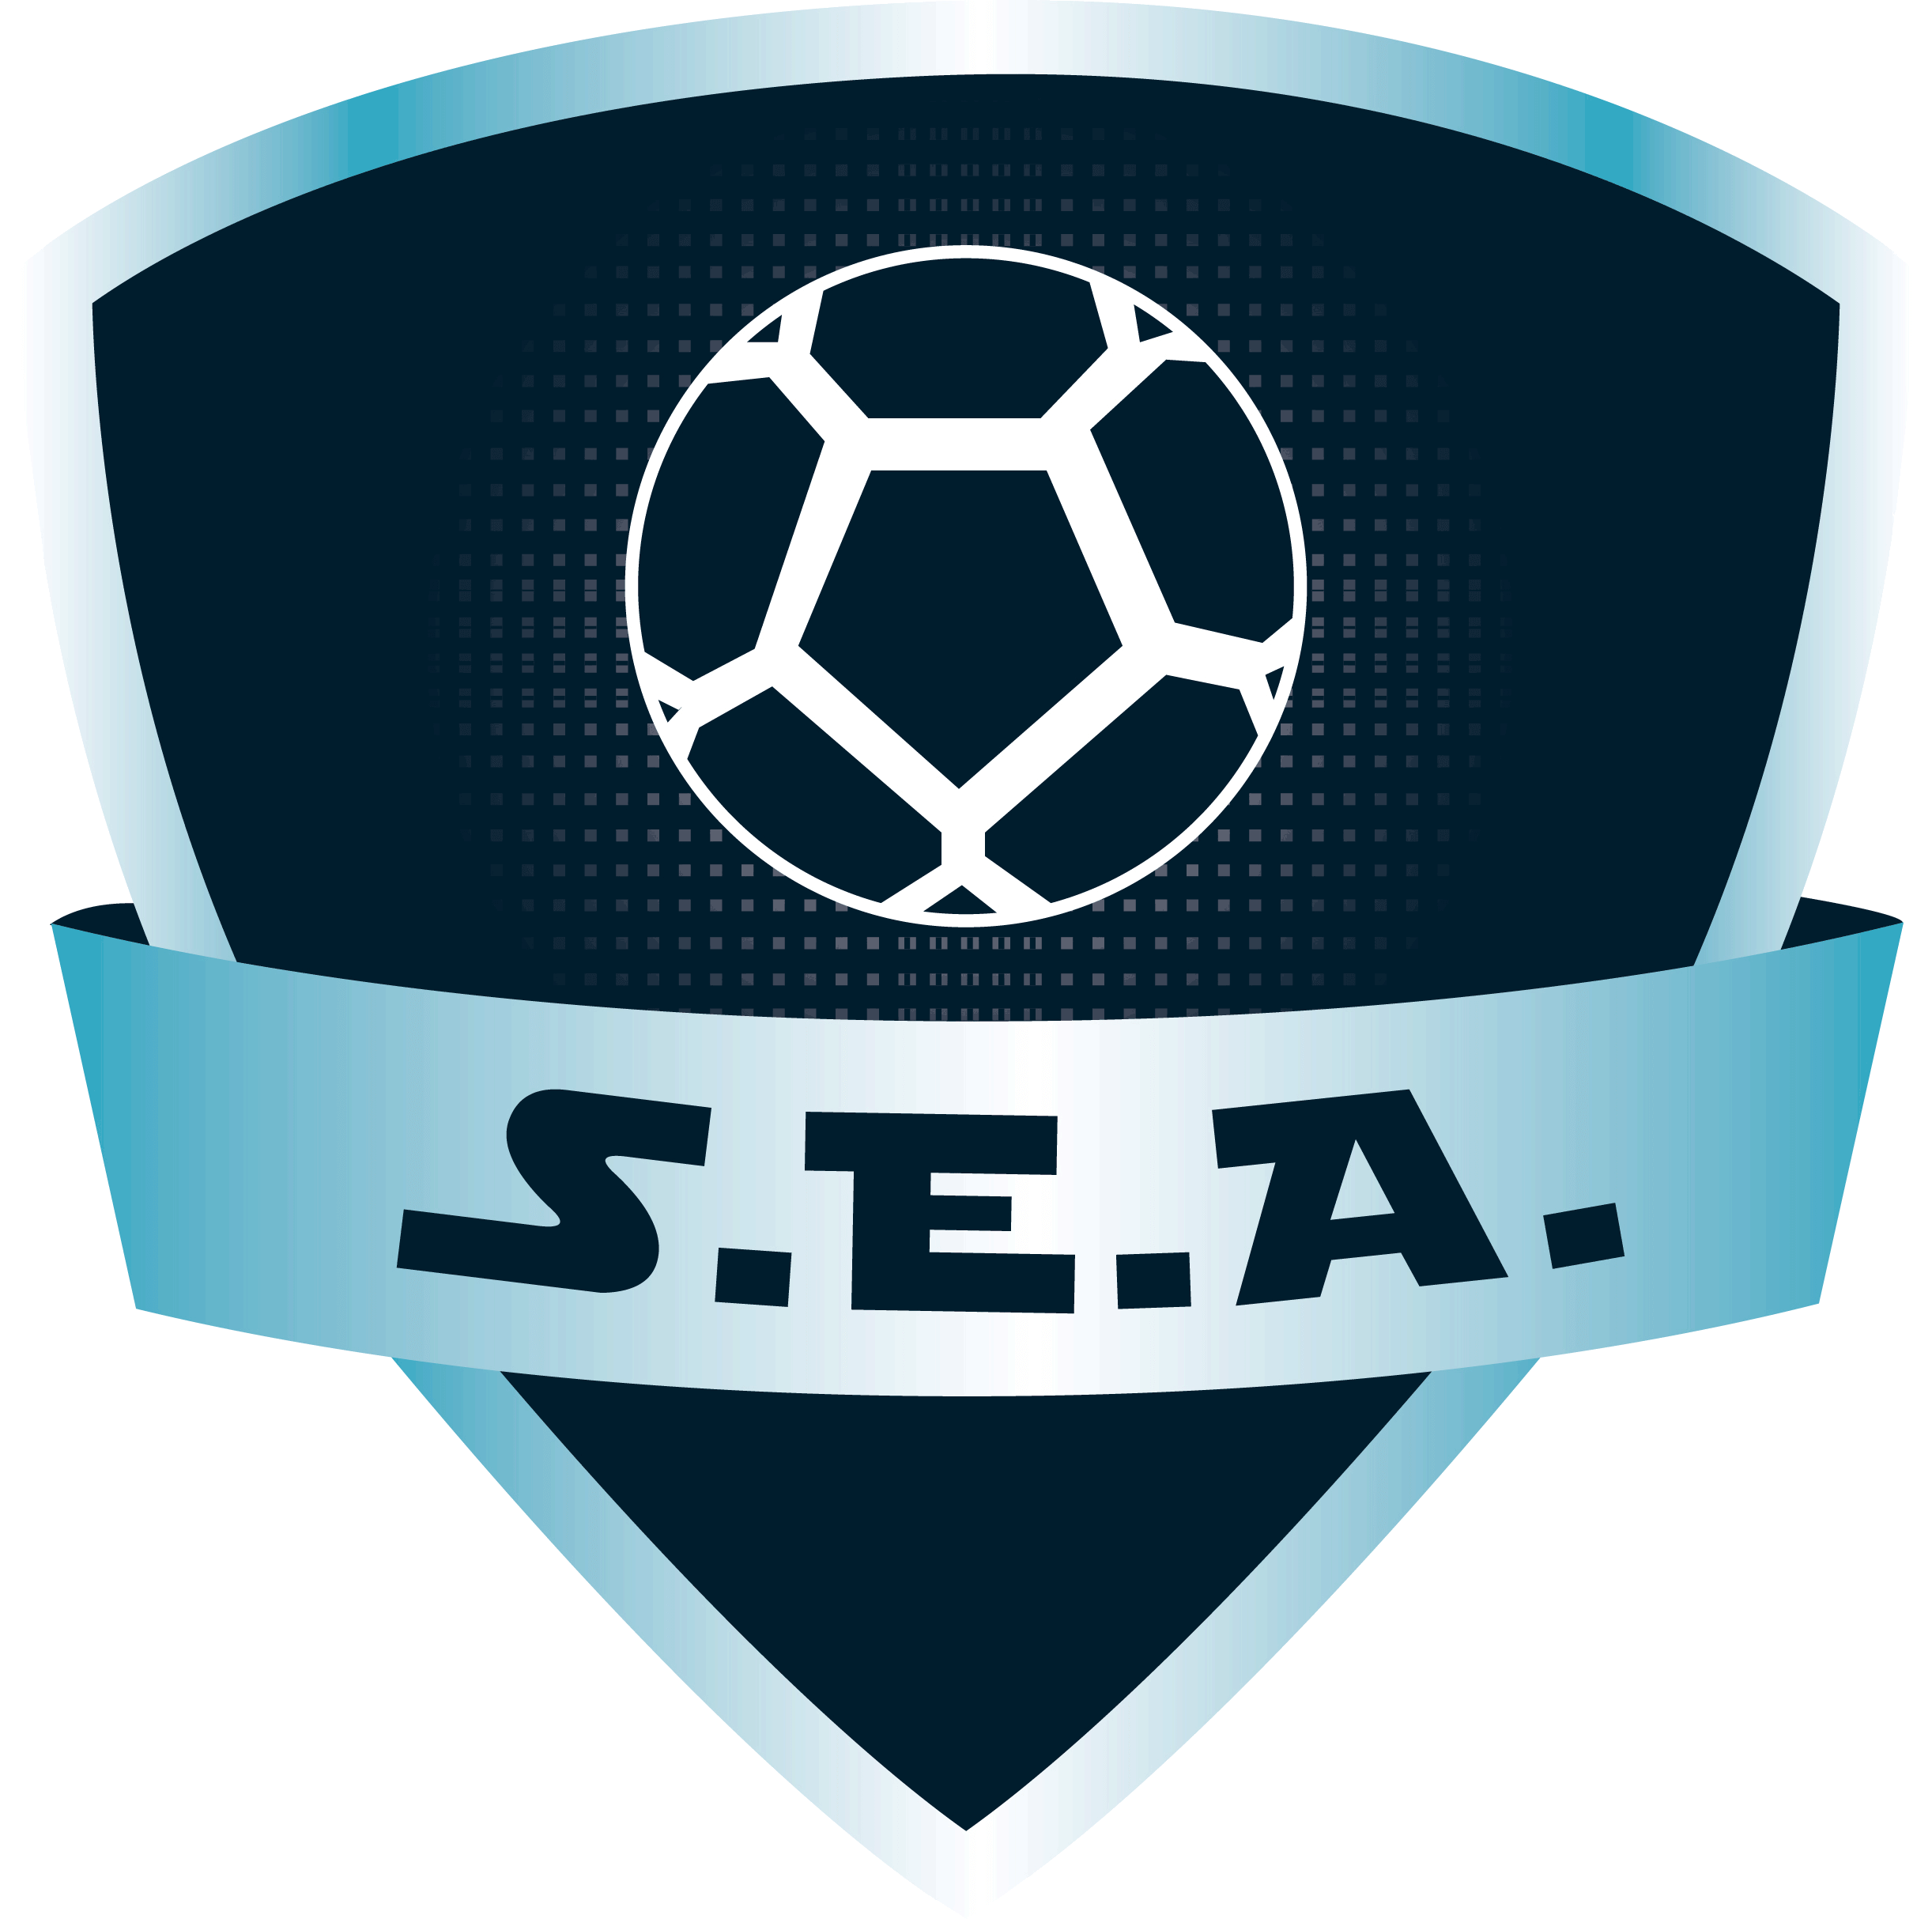 SEA-logo